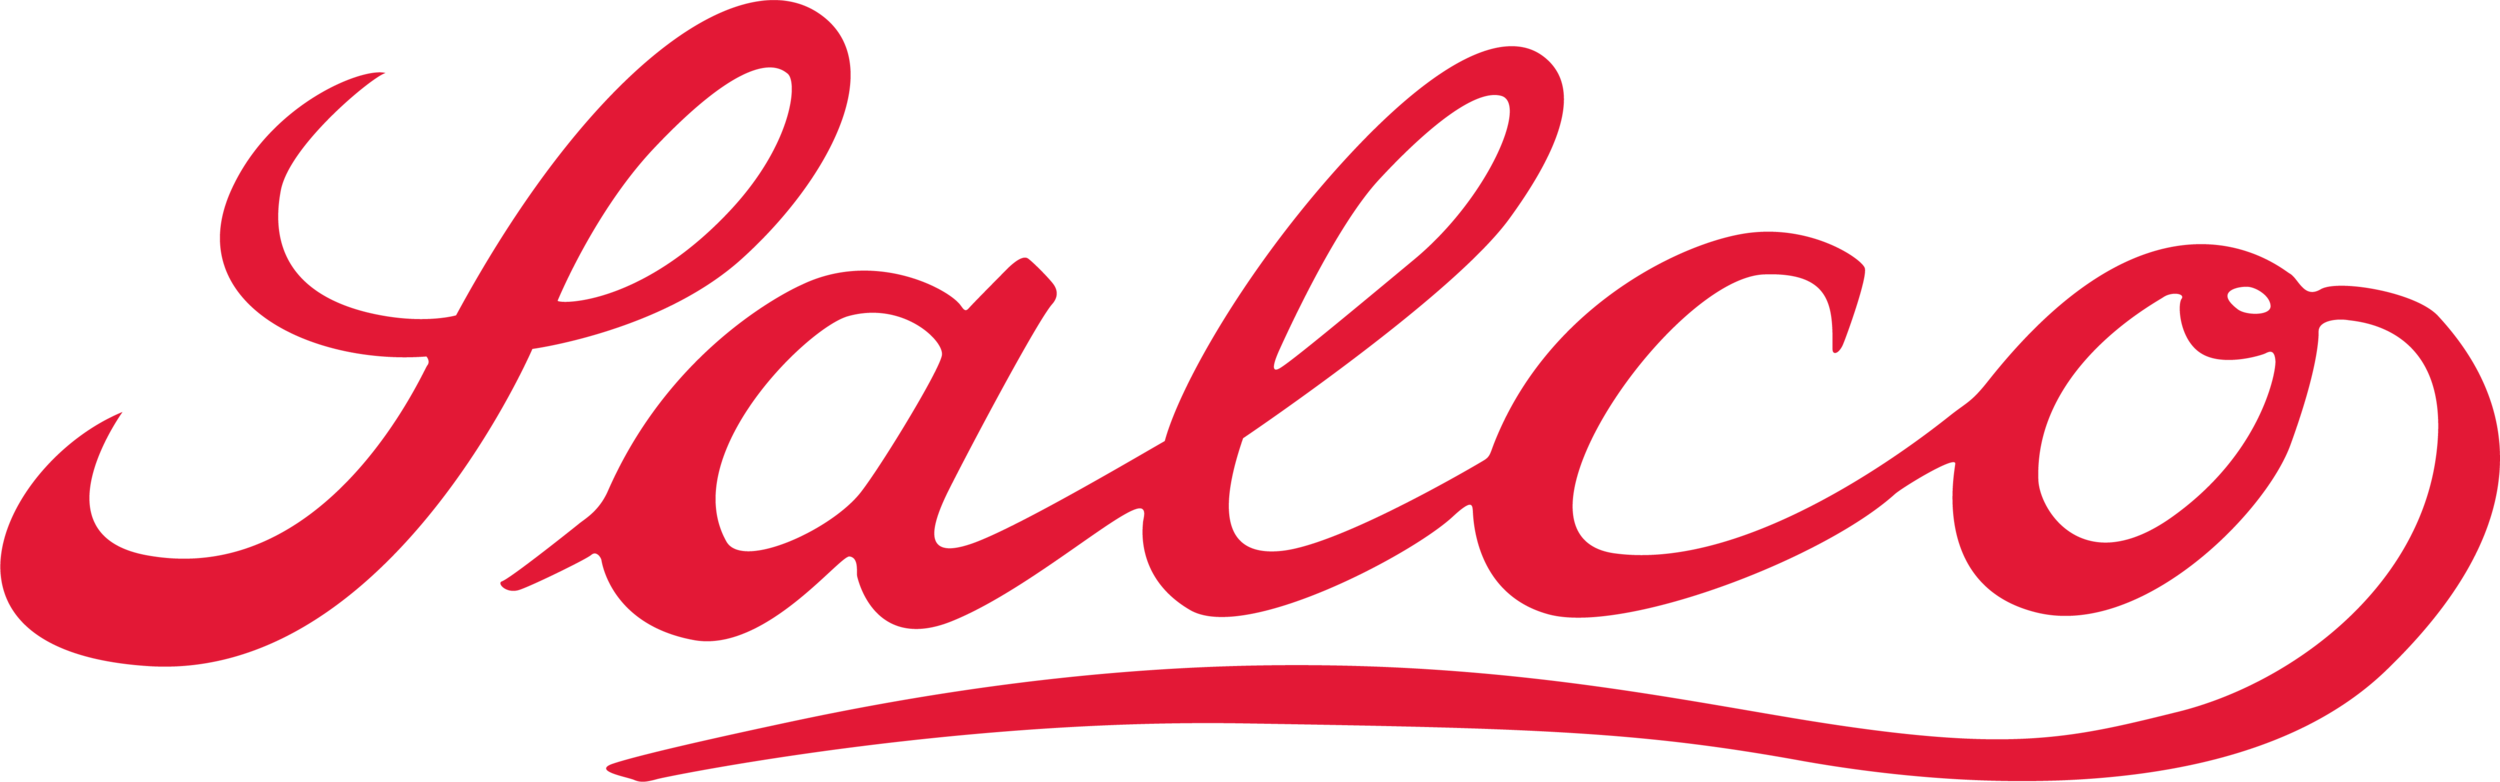 Salco Logo.png